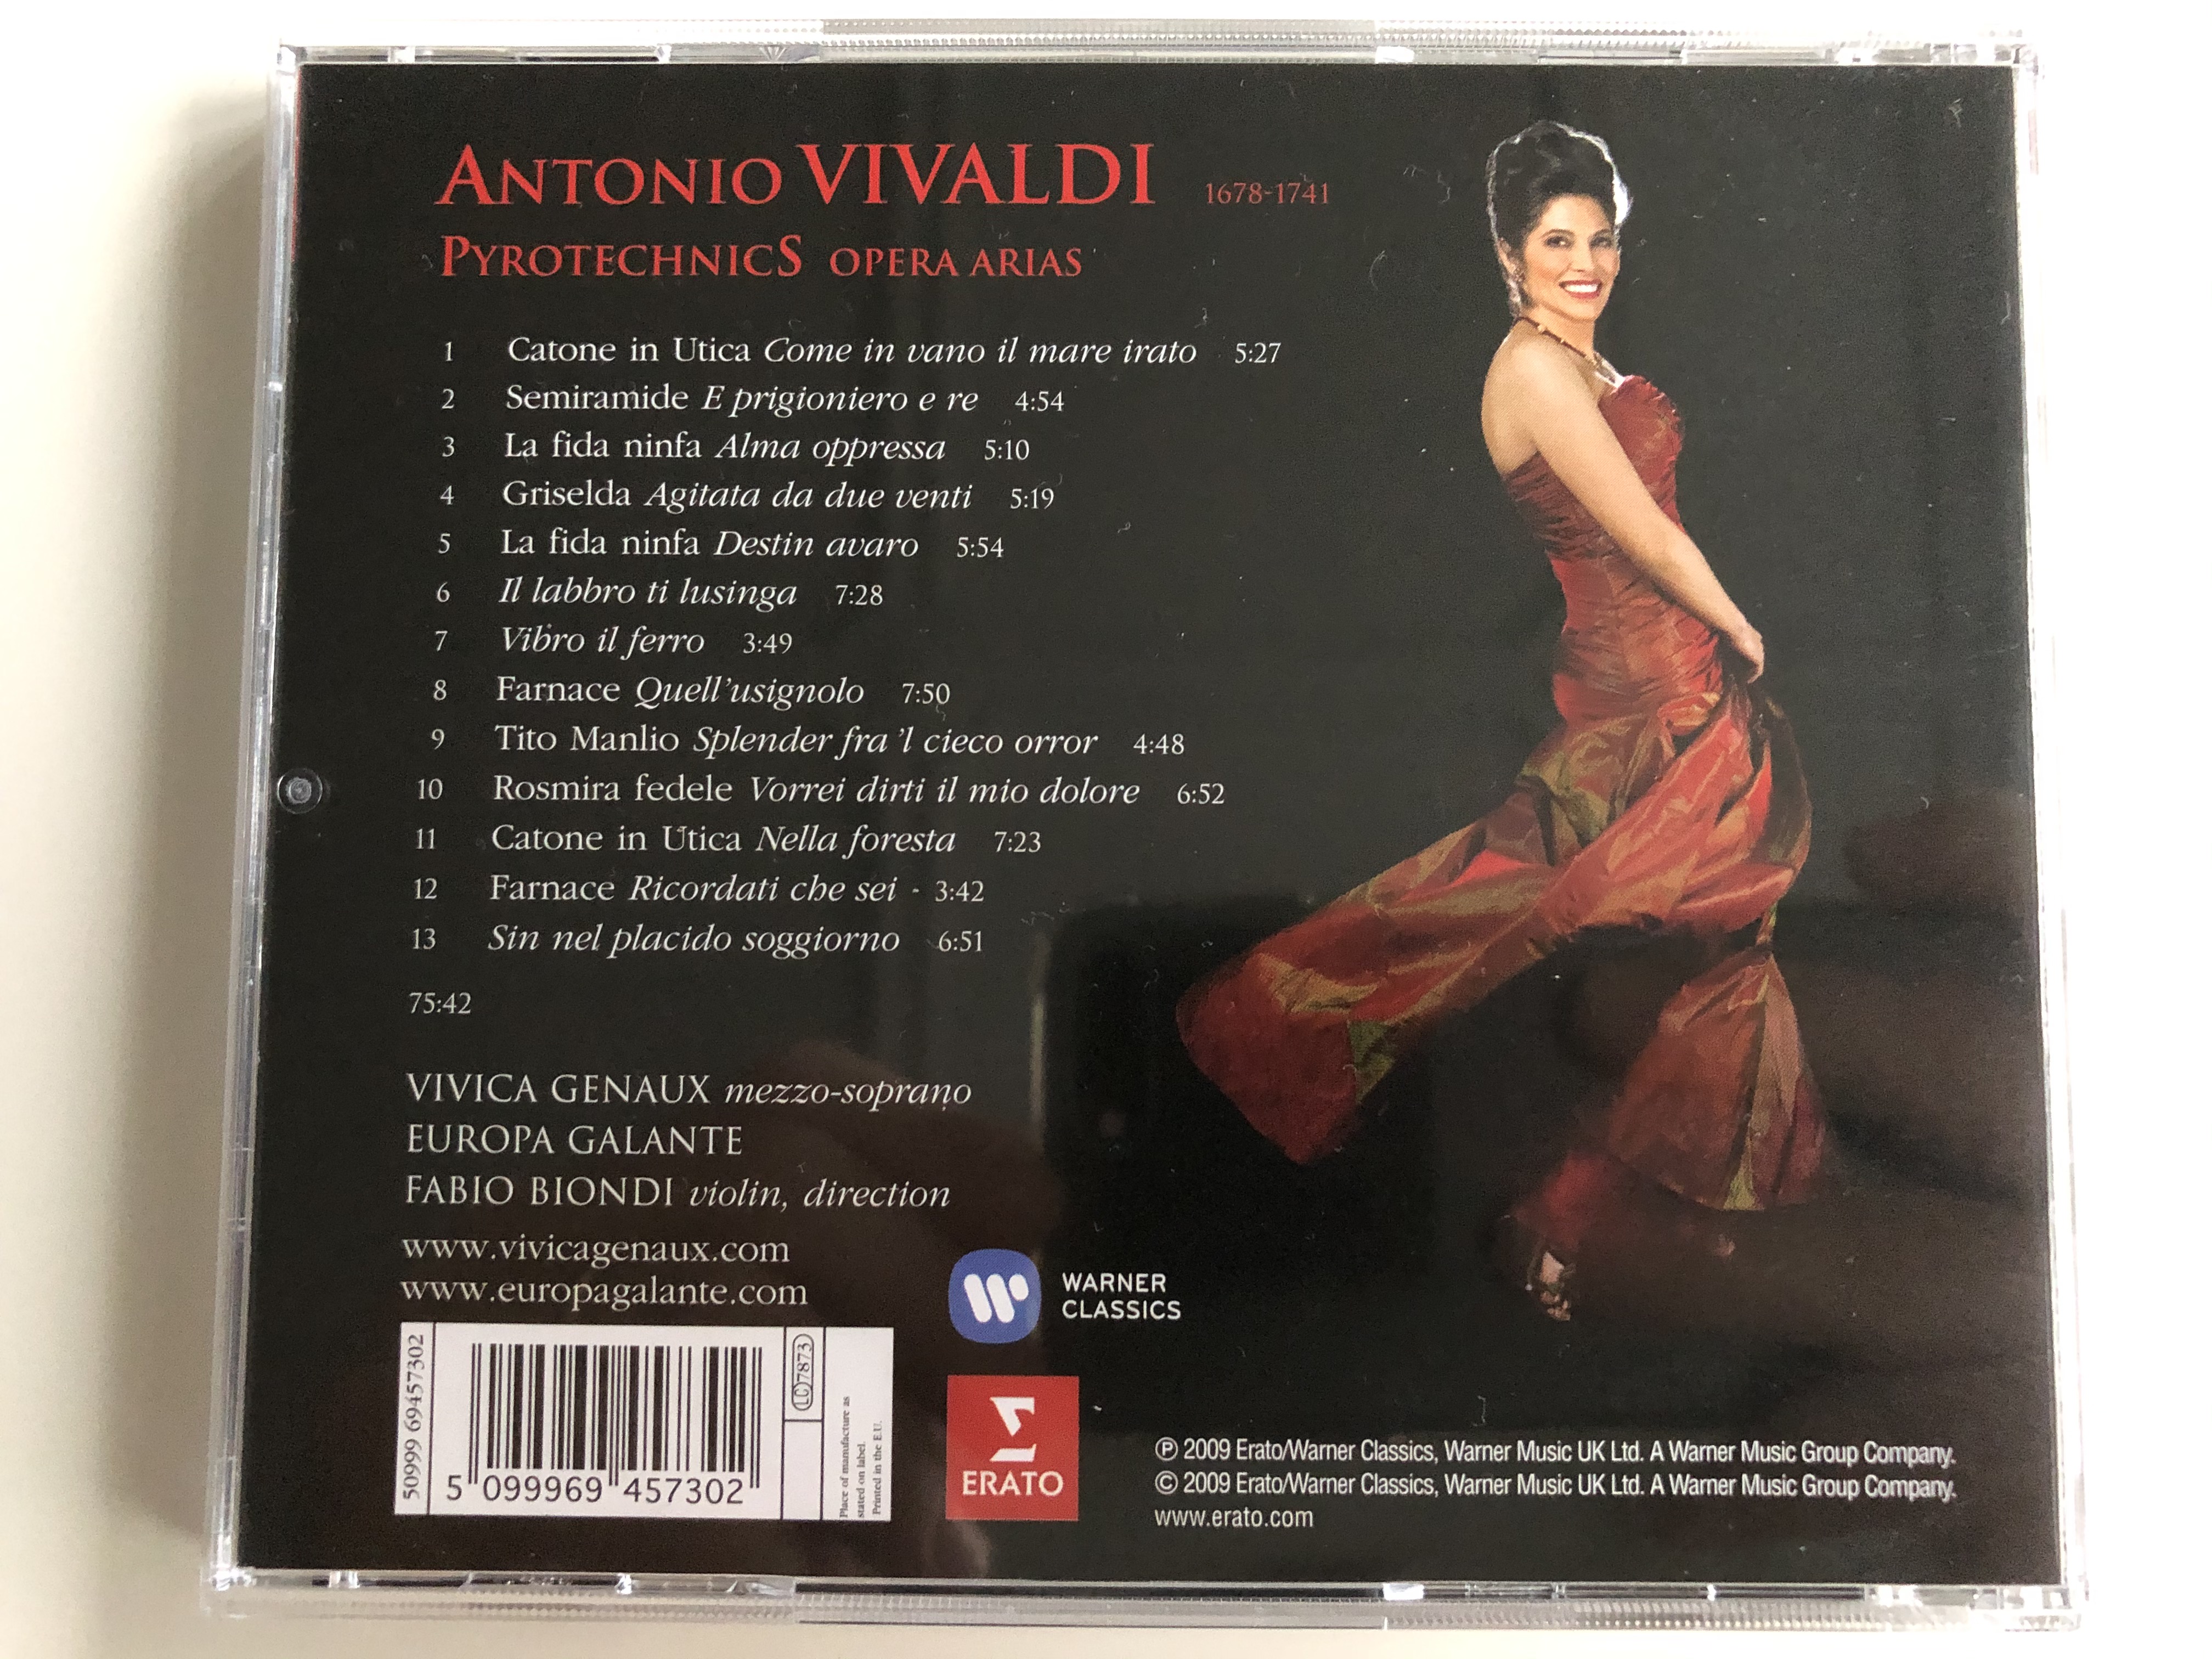 vivica-genaux-vivaldi-arias-pyrotechnics-europa-galante-fabio-biondi-virgin-classics-audio-cd-2009-stereo-5099969457302-10-.jpg